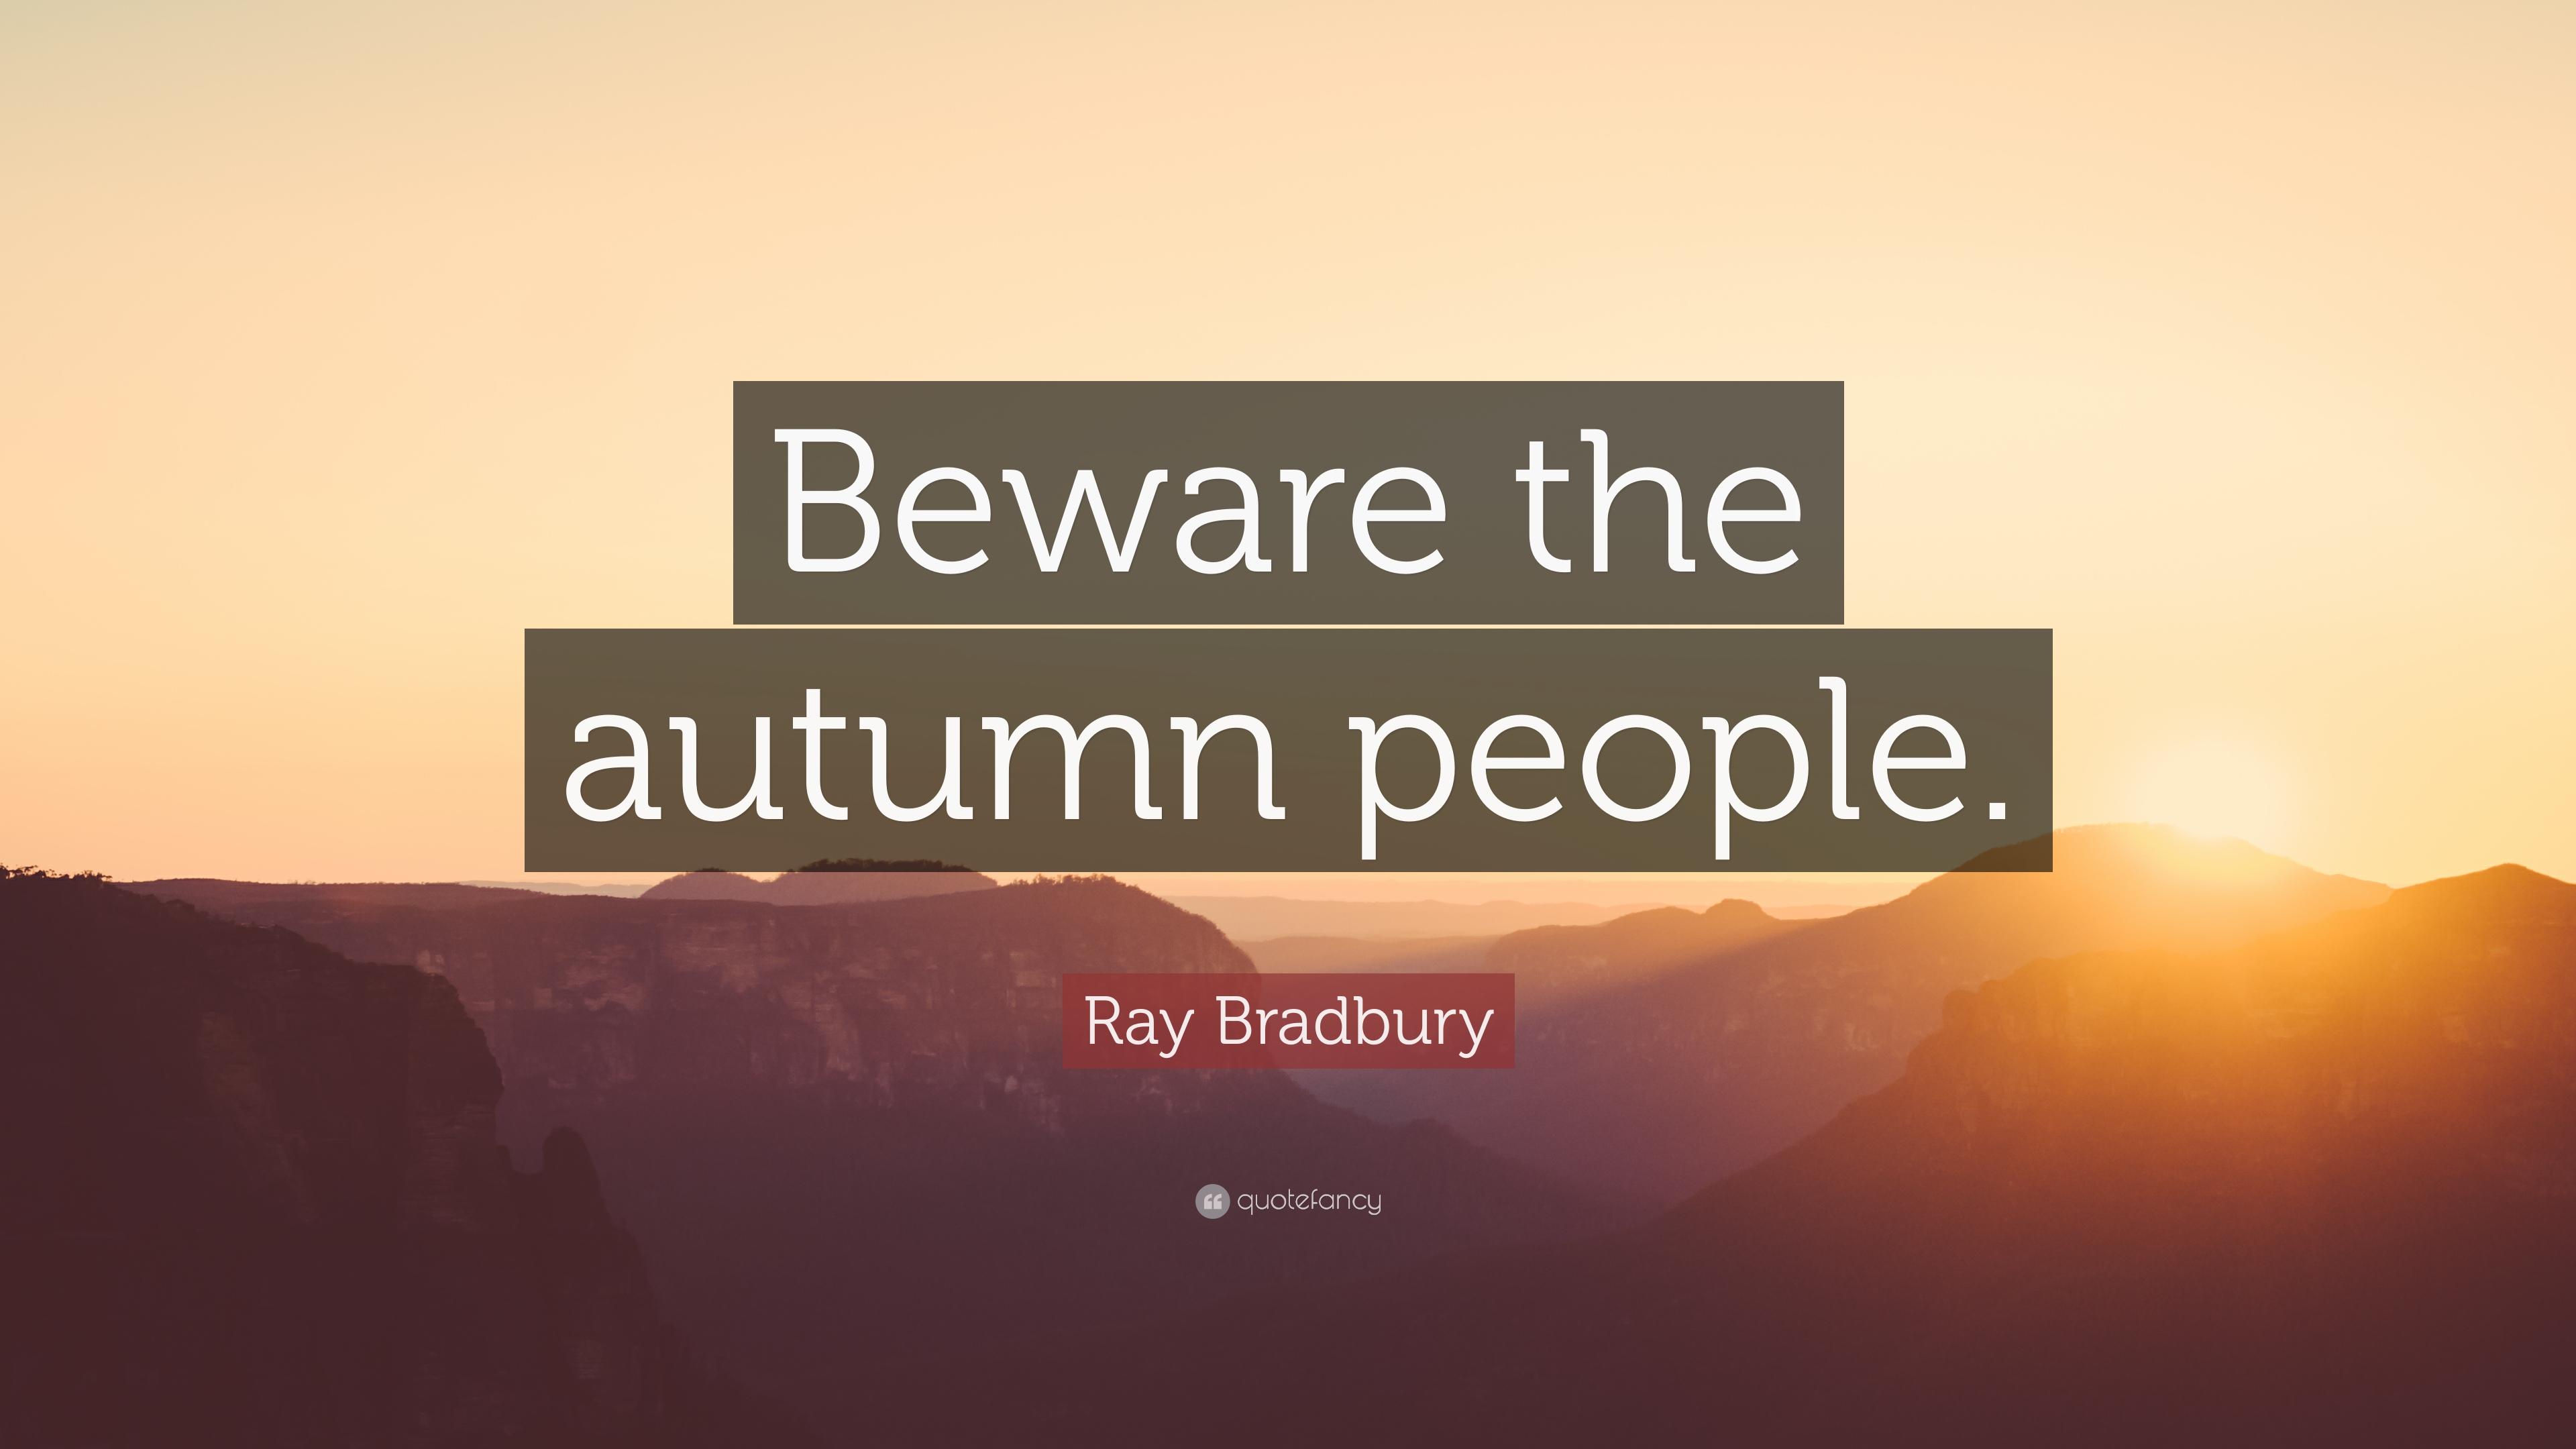 Ray Bradbury Quote: “Beware the autumn people.” 12